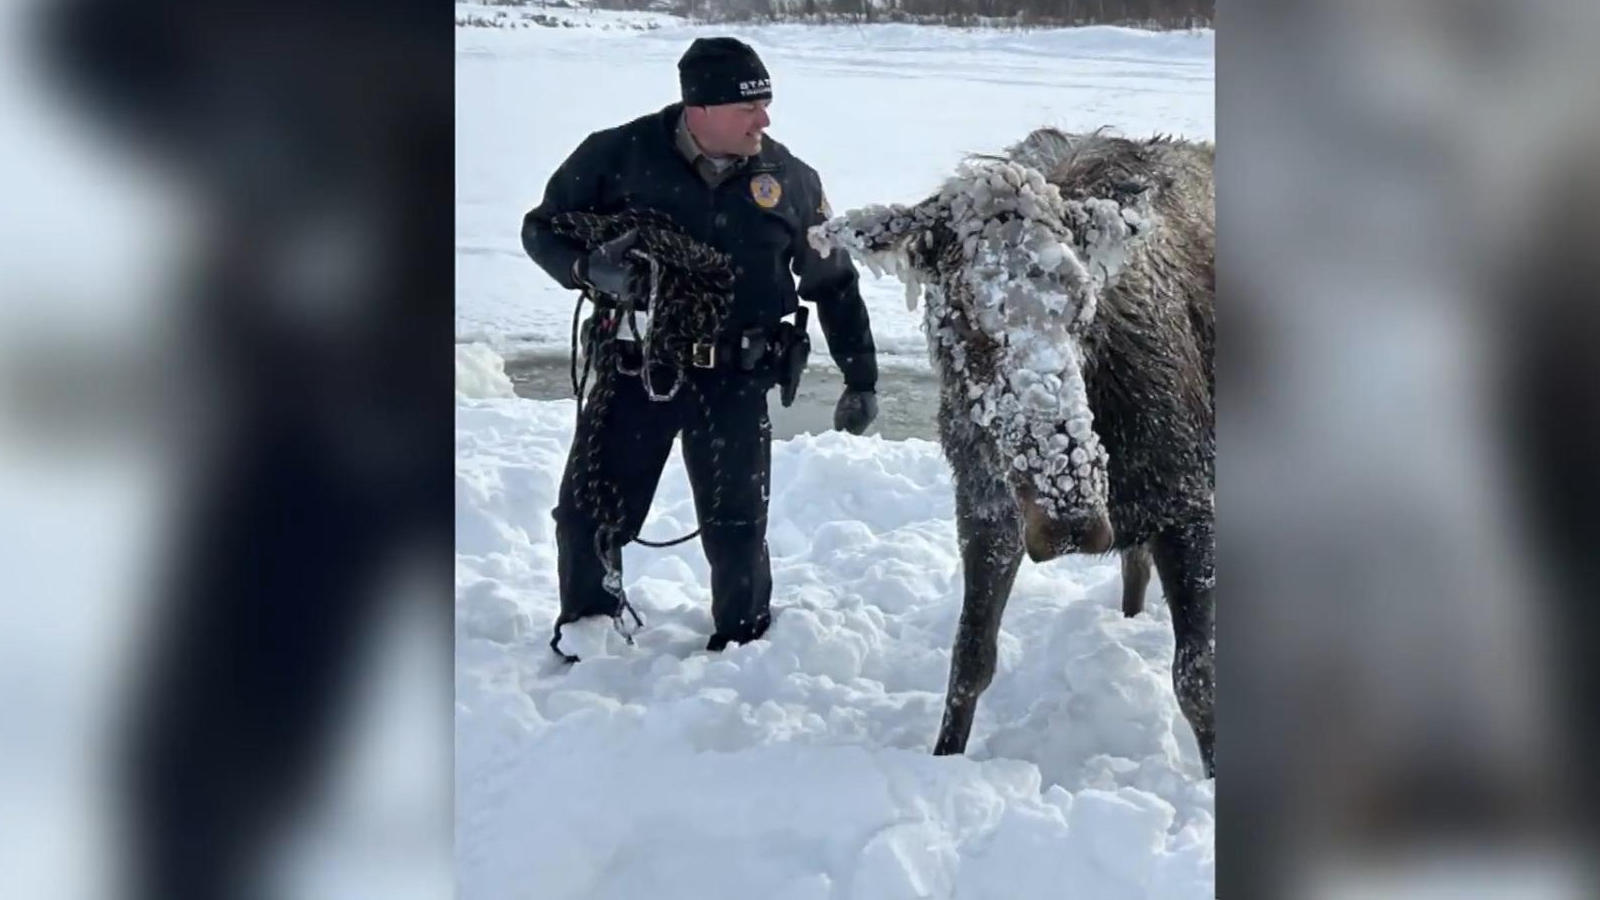 Aus dem Eis! Männer retten Elch aus zugefrorenen See Rettung vor dem Kältetod